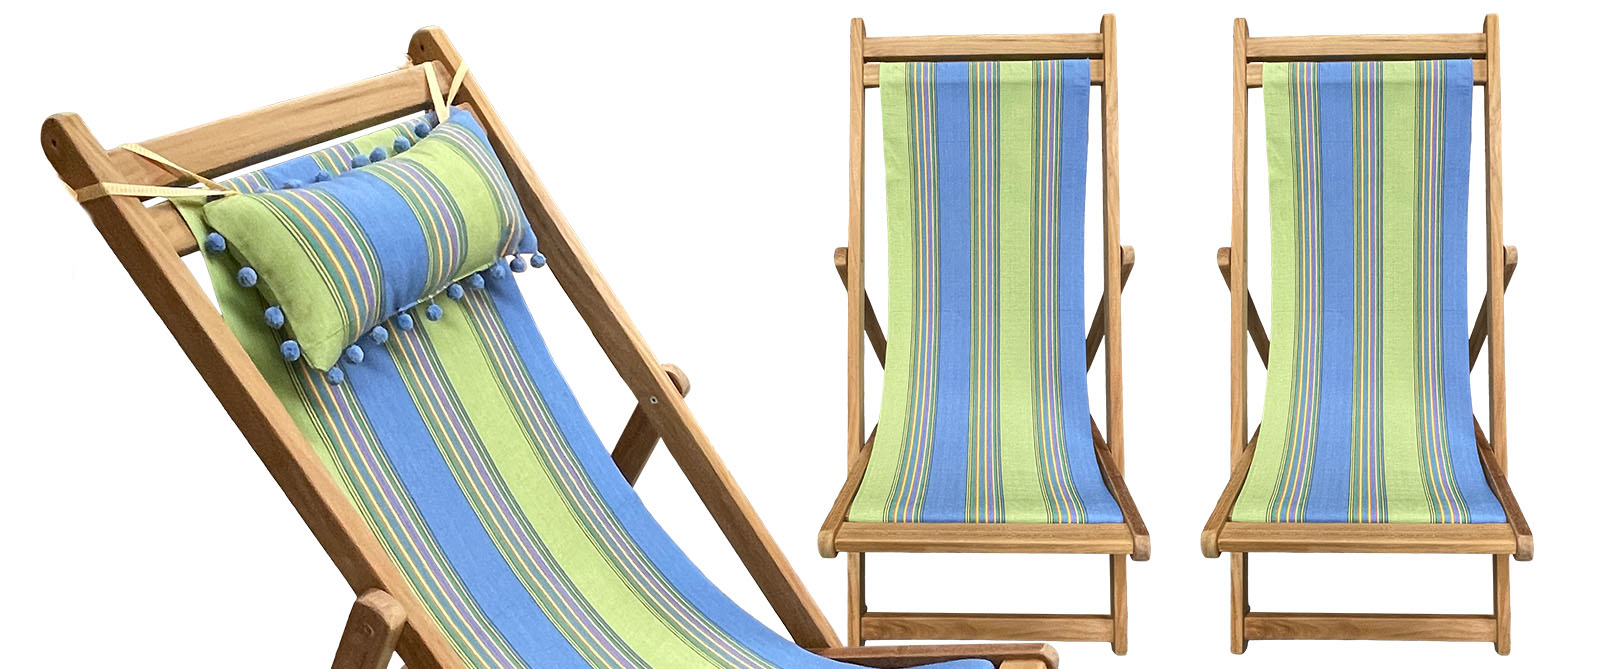 Premium Deck Chairs - Traditional Folding Wooden Deckchairs